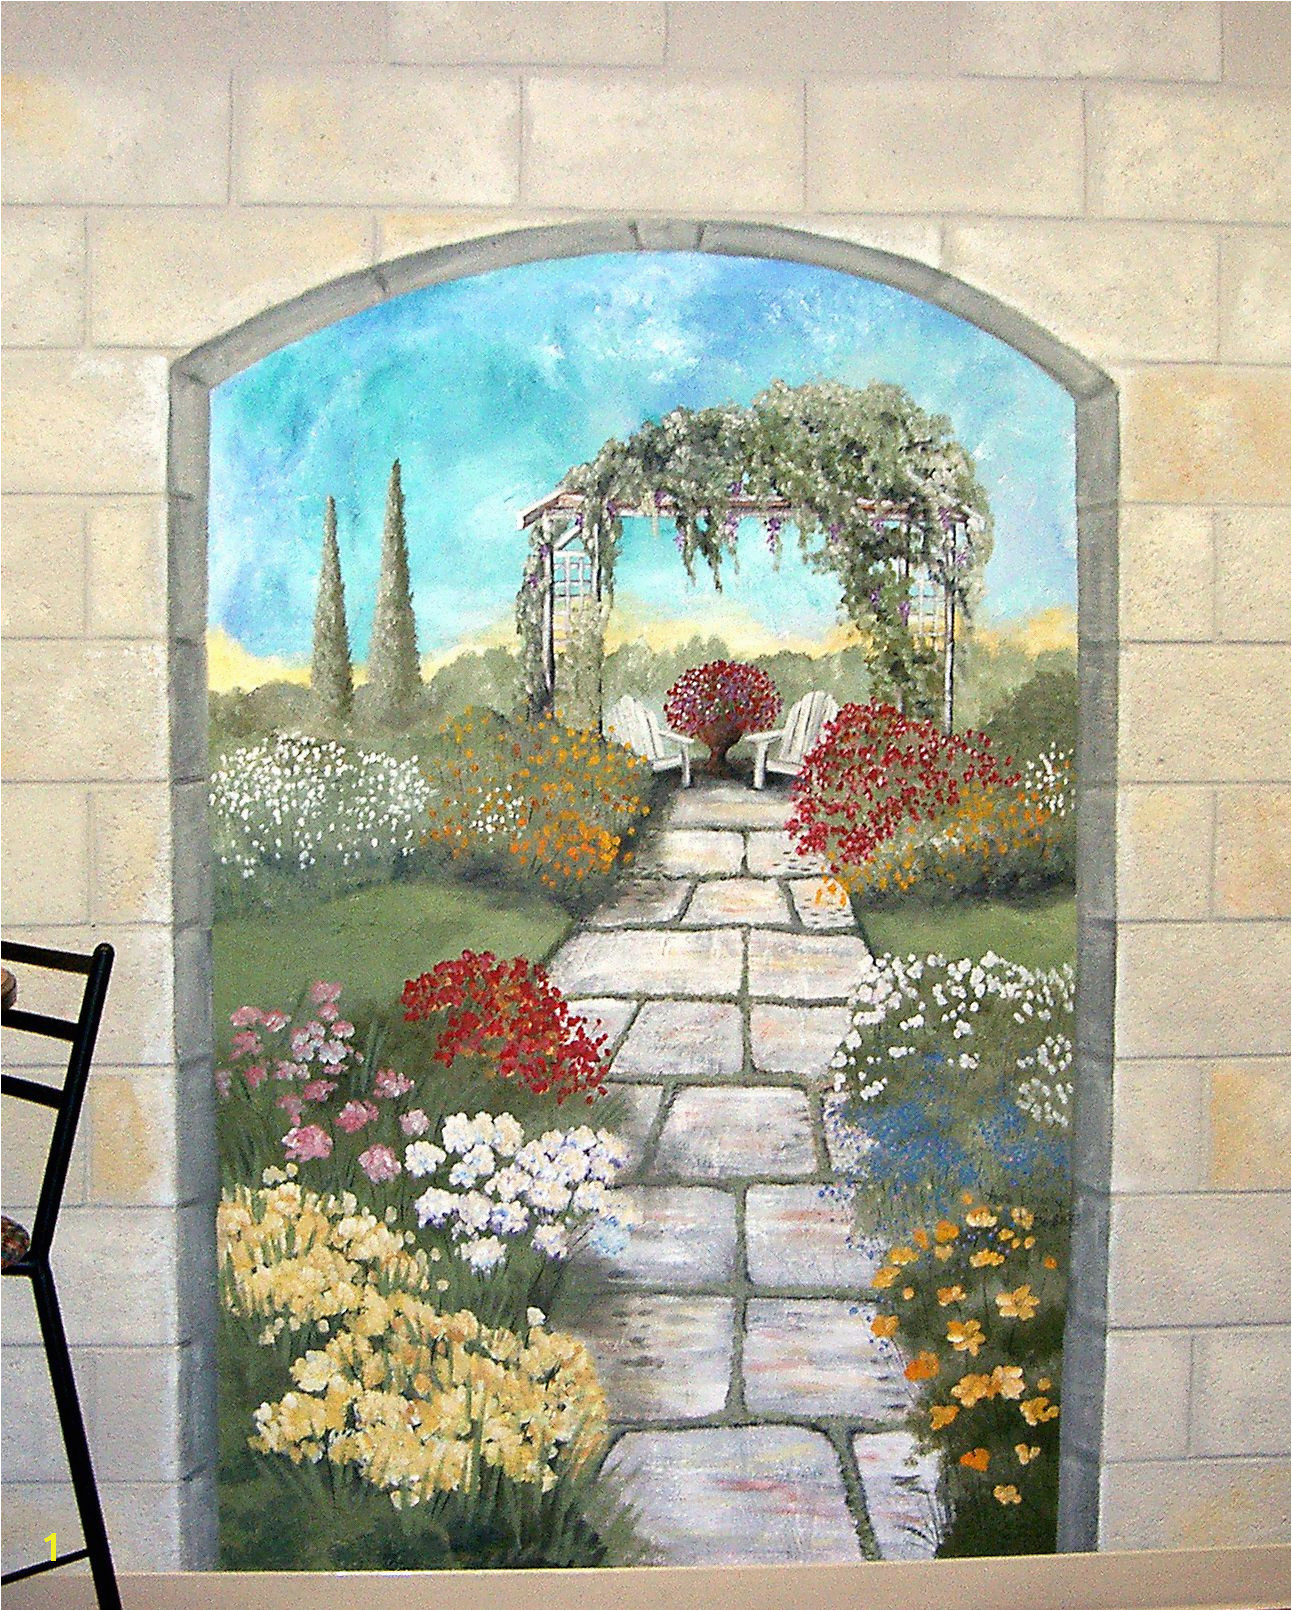 Garden mural on a cement block wall Colorful flower garden mural with terrace